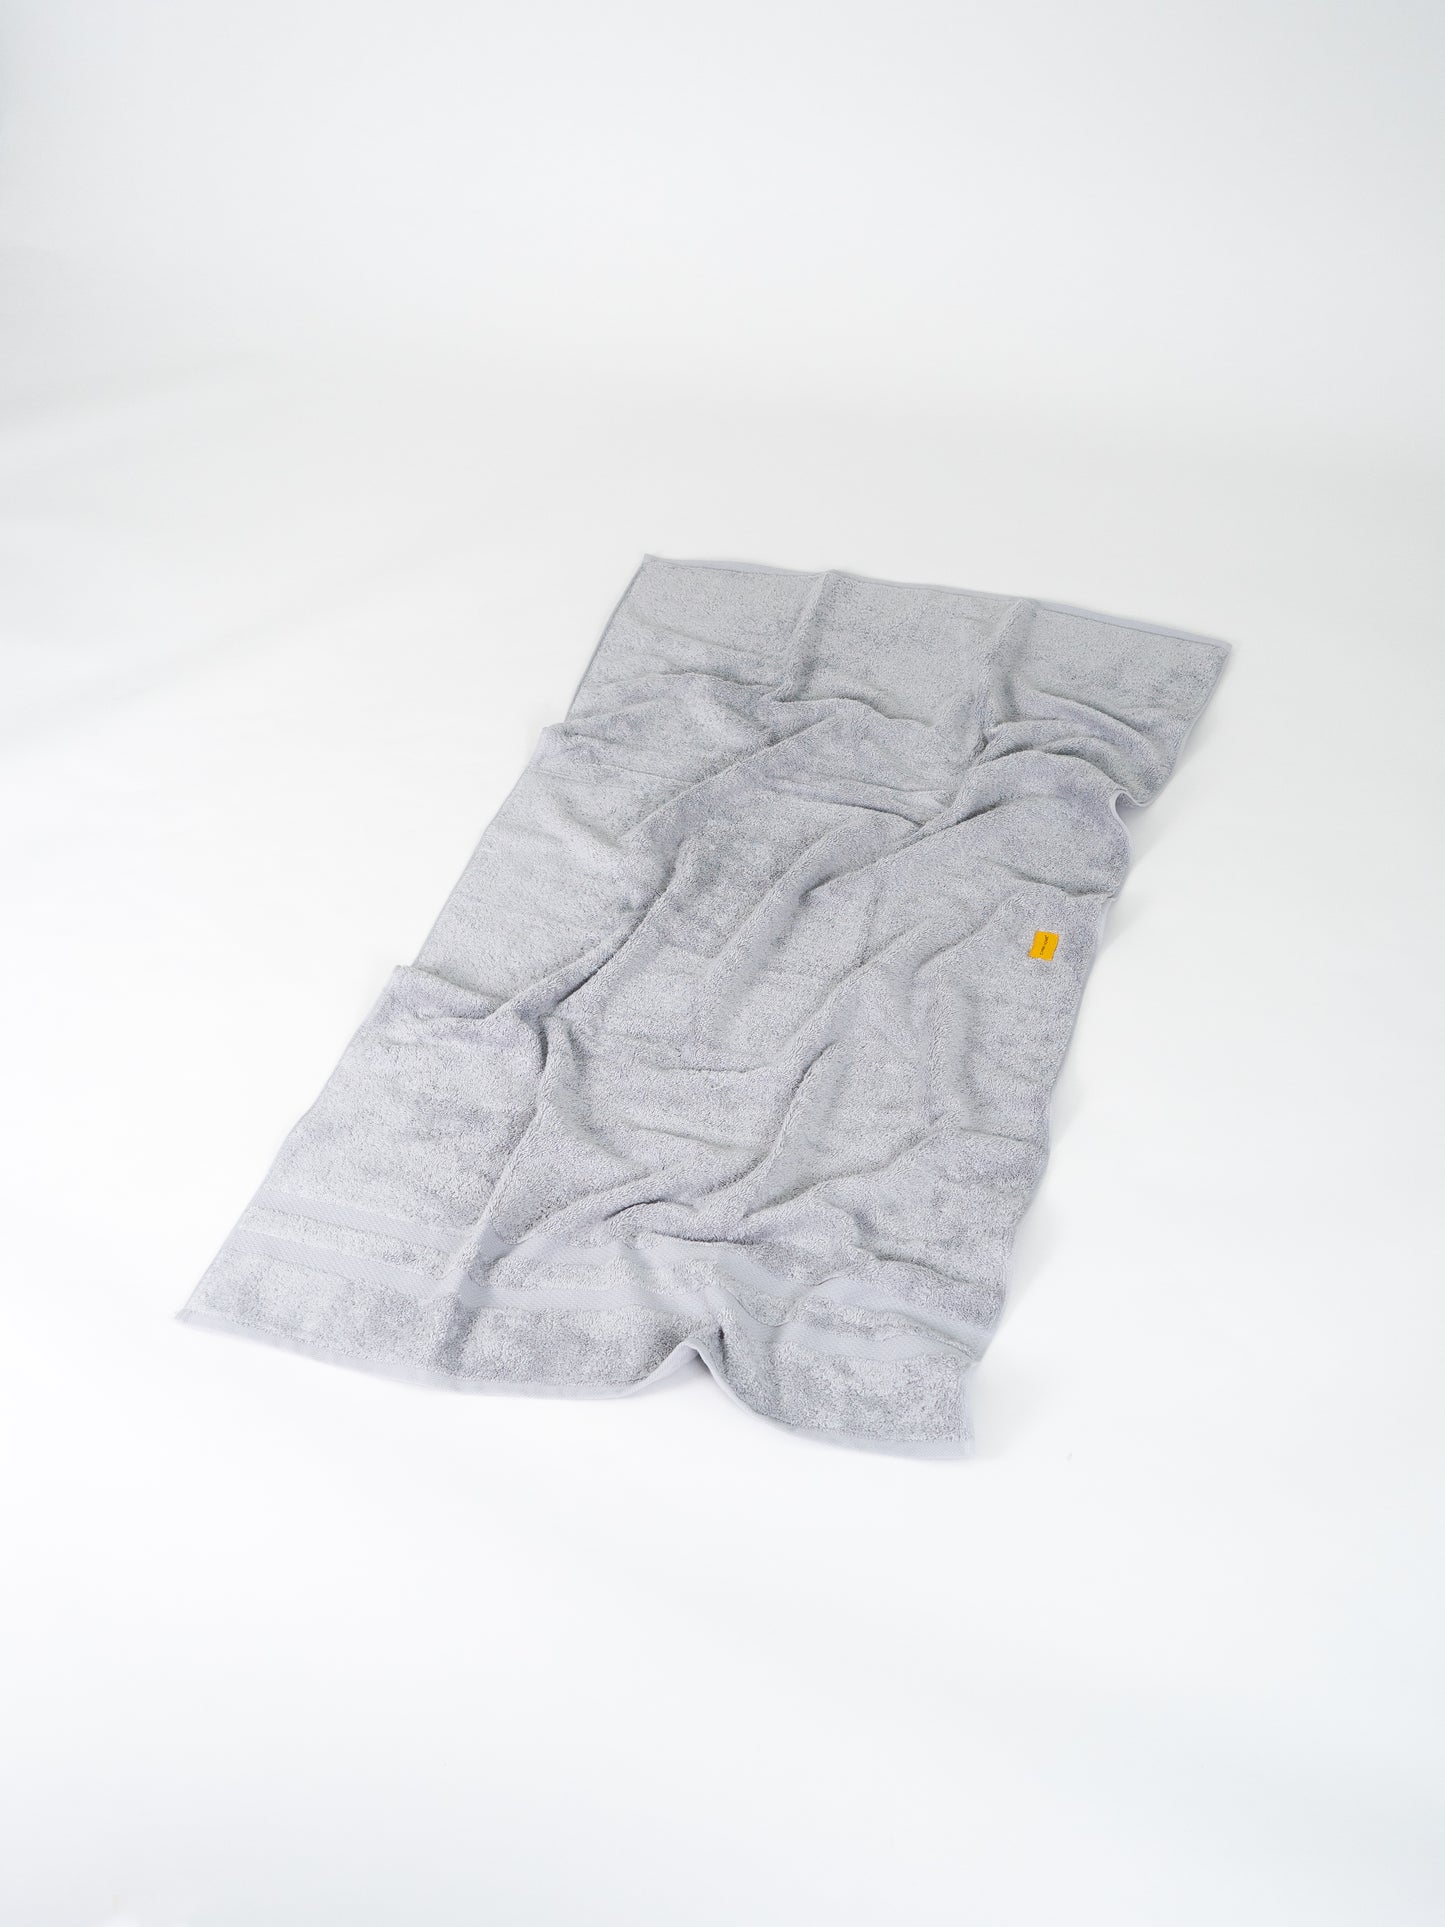 gråa-handdukar-i-set-produktbild-chimi-home-frotté-signature-collection